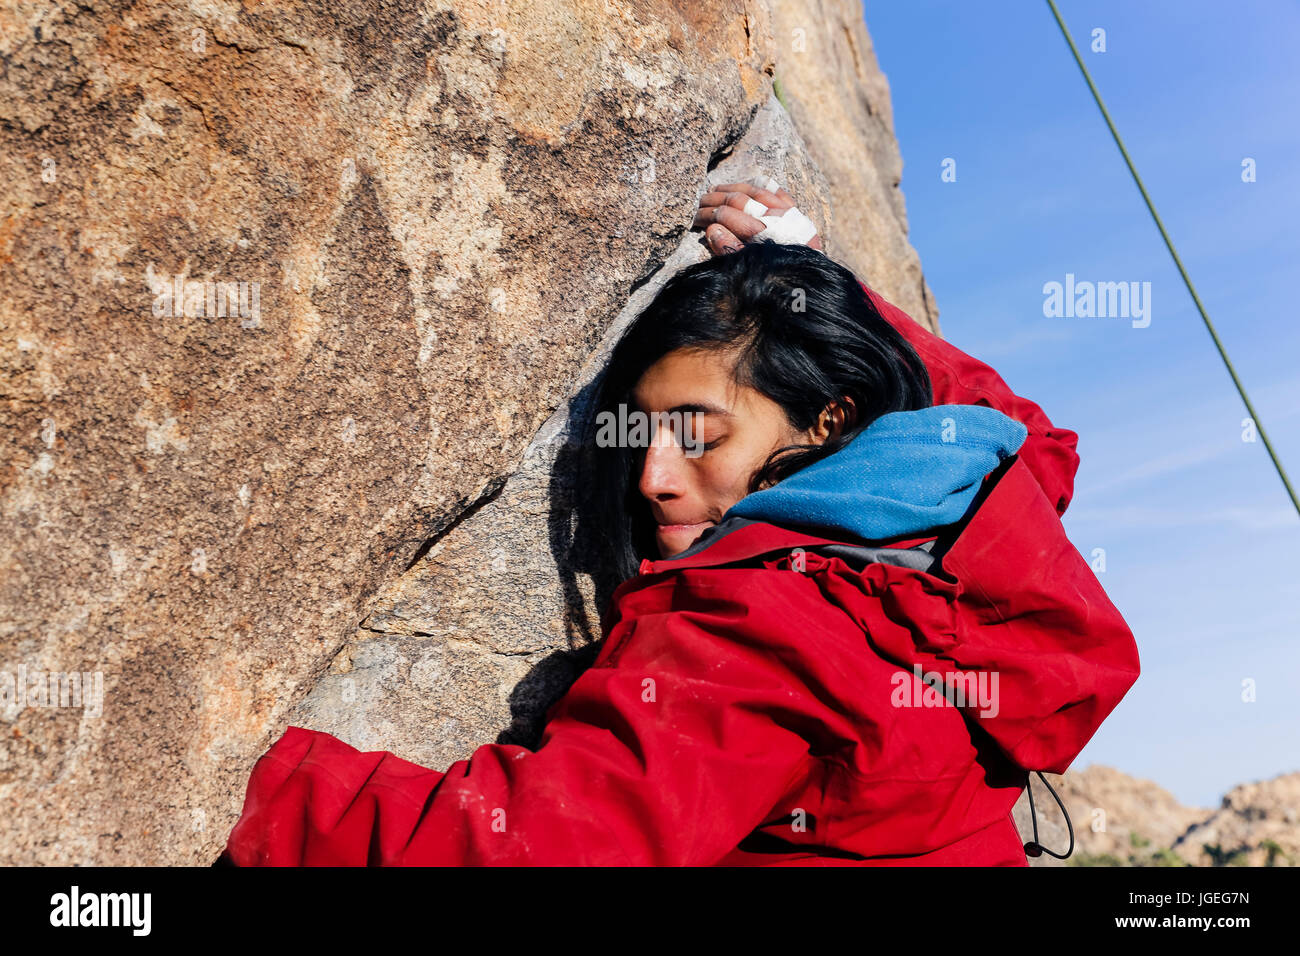 South asian young woman rock climbing in the desert Stock Photo